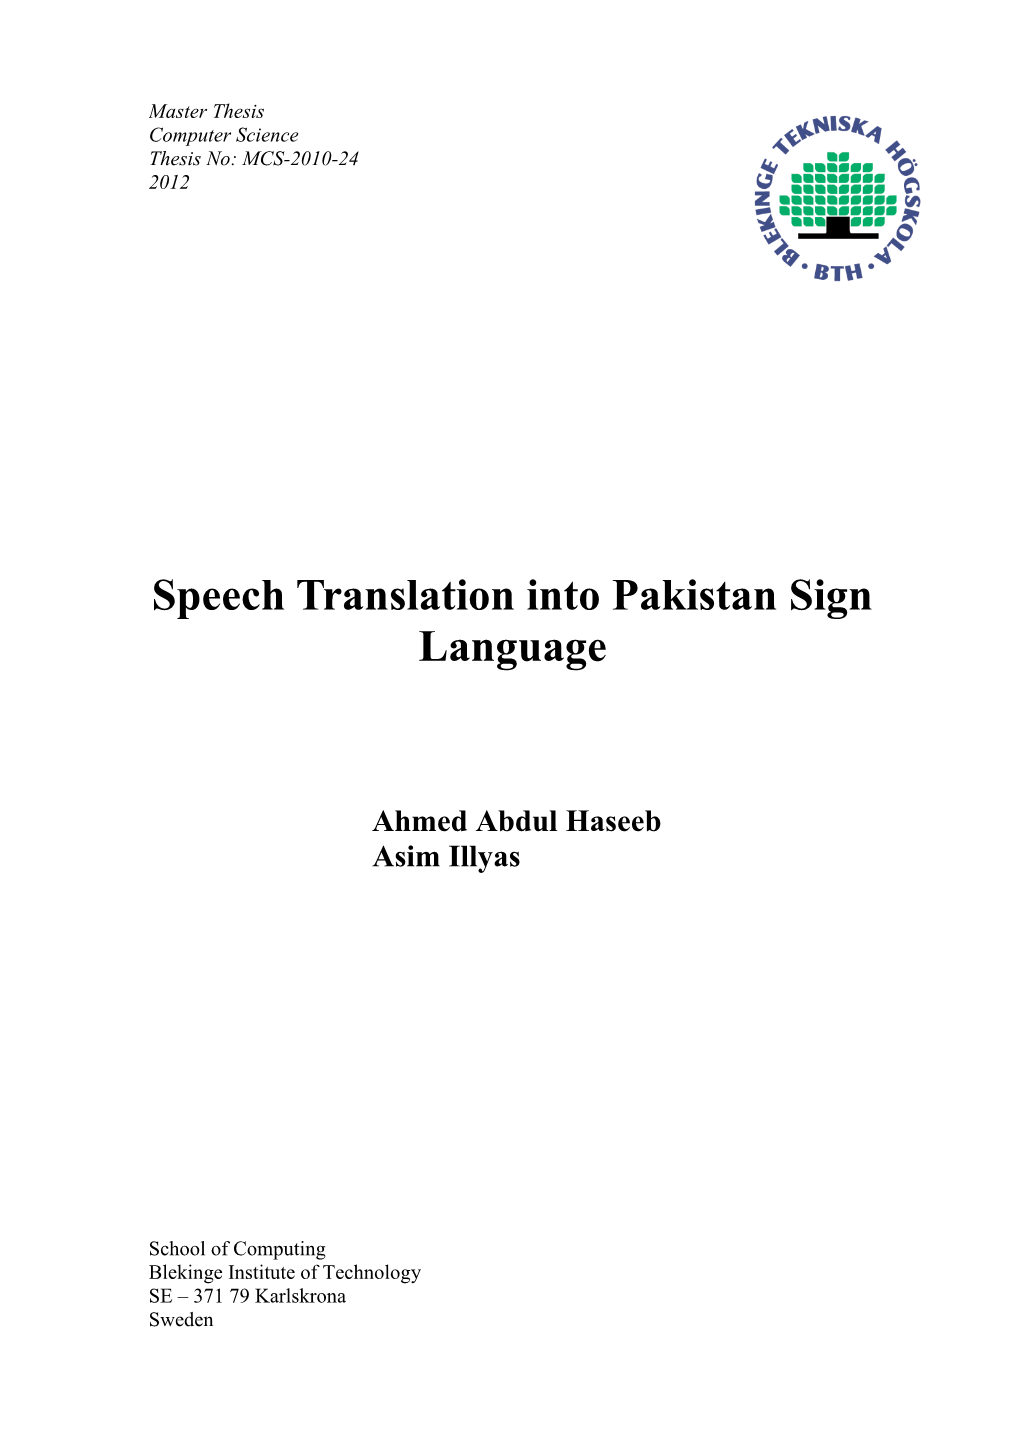 Speech Translation Into Pakistan Sign Language